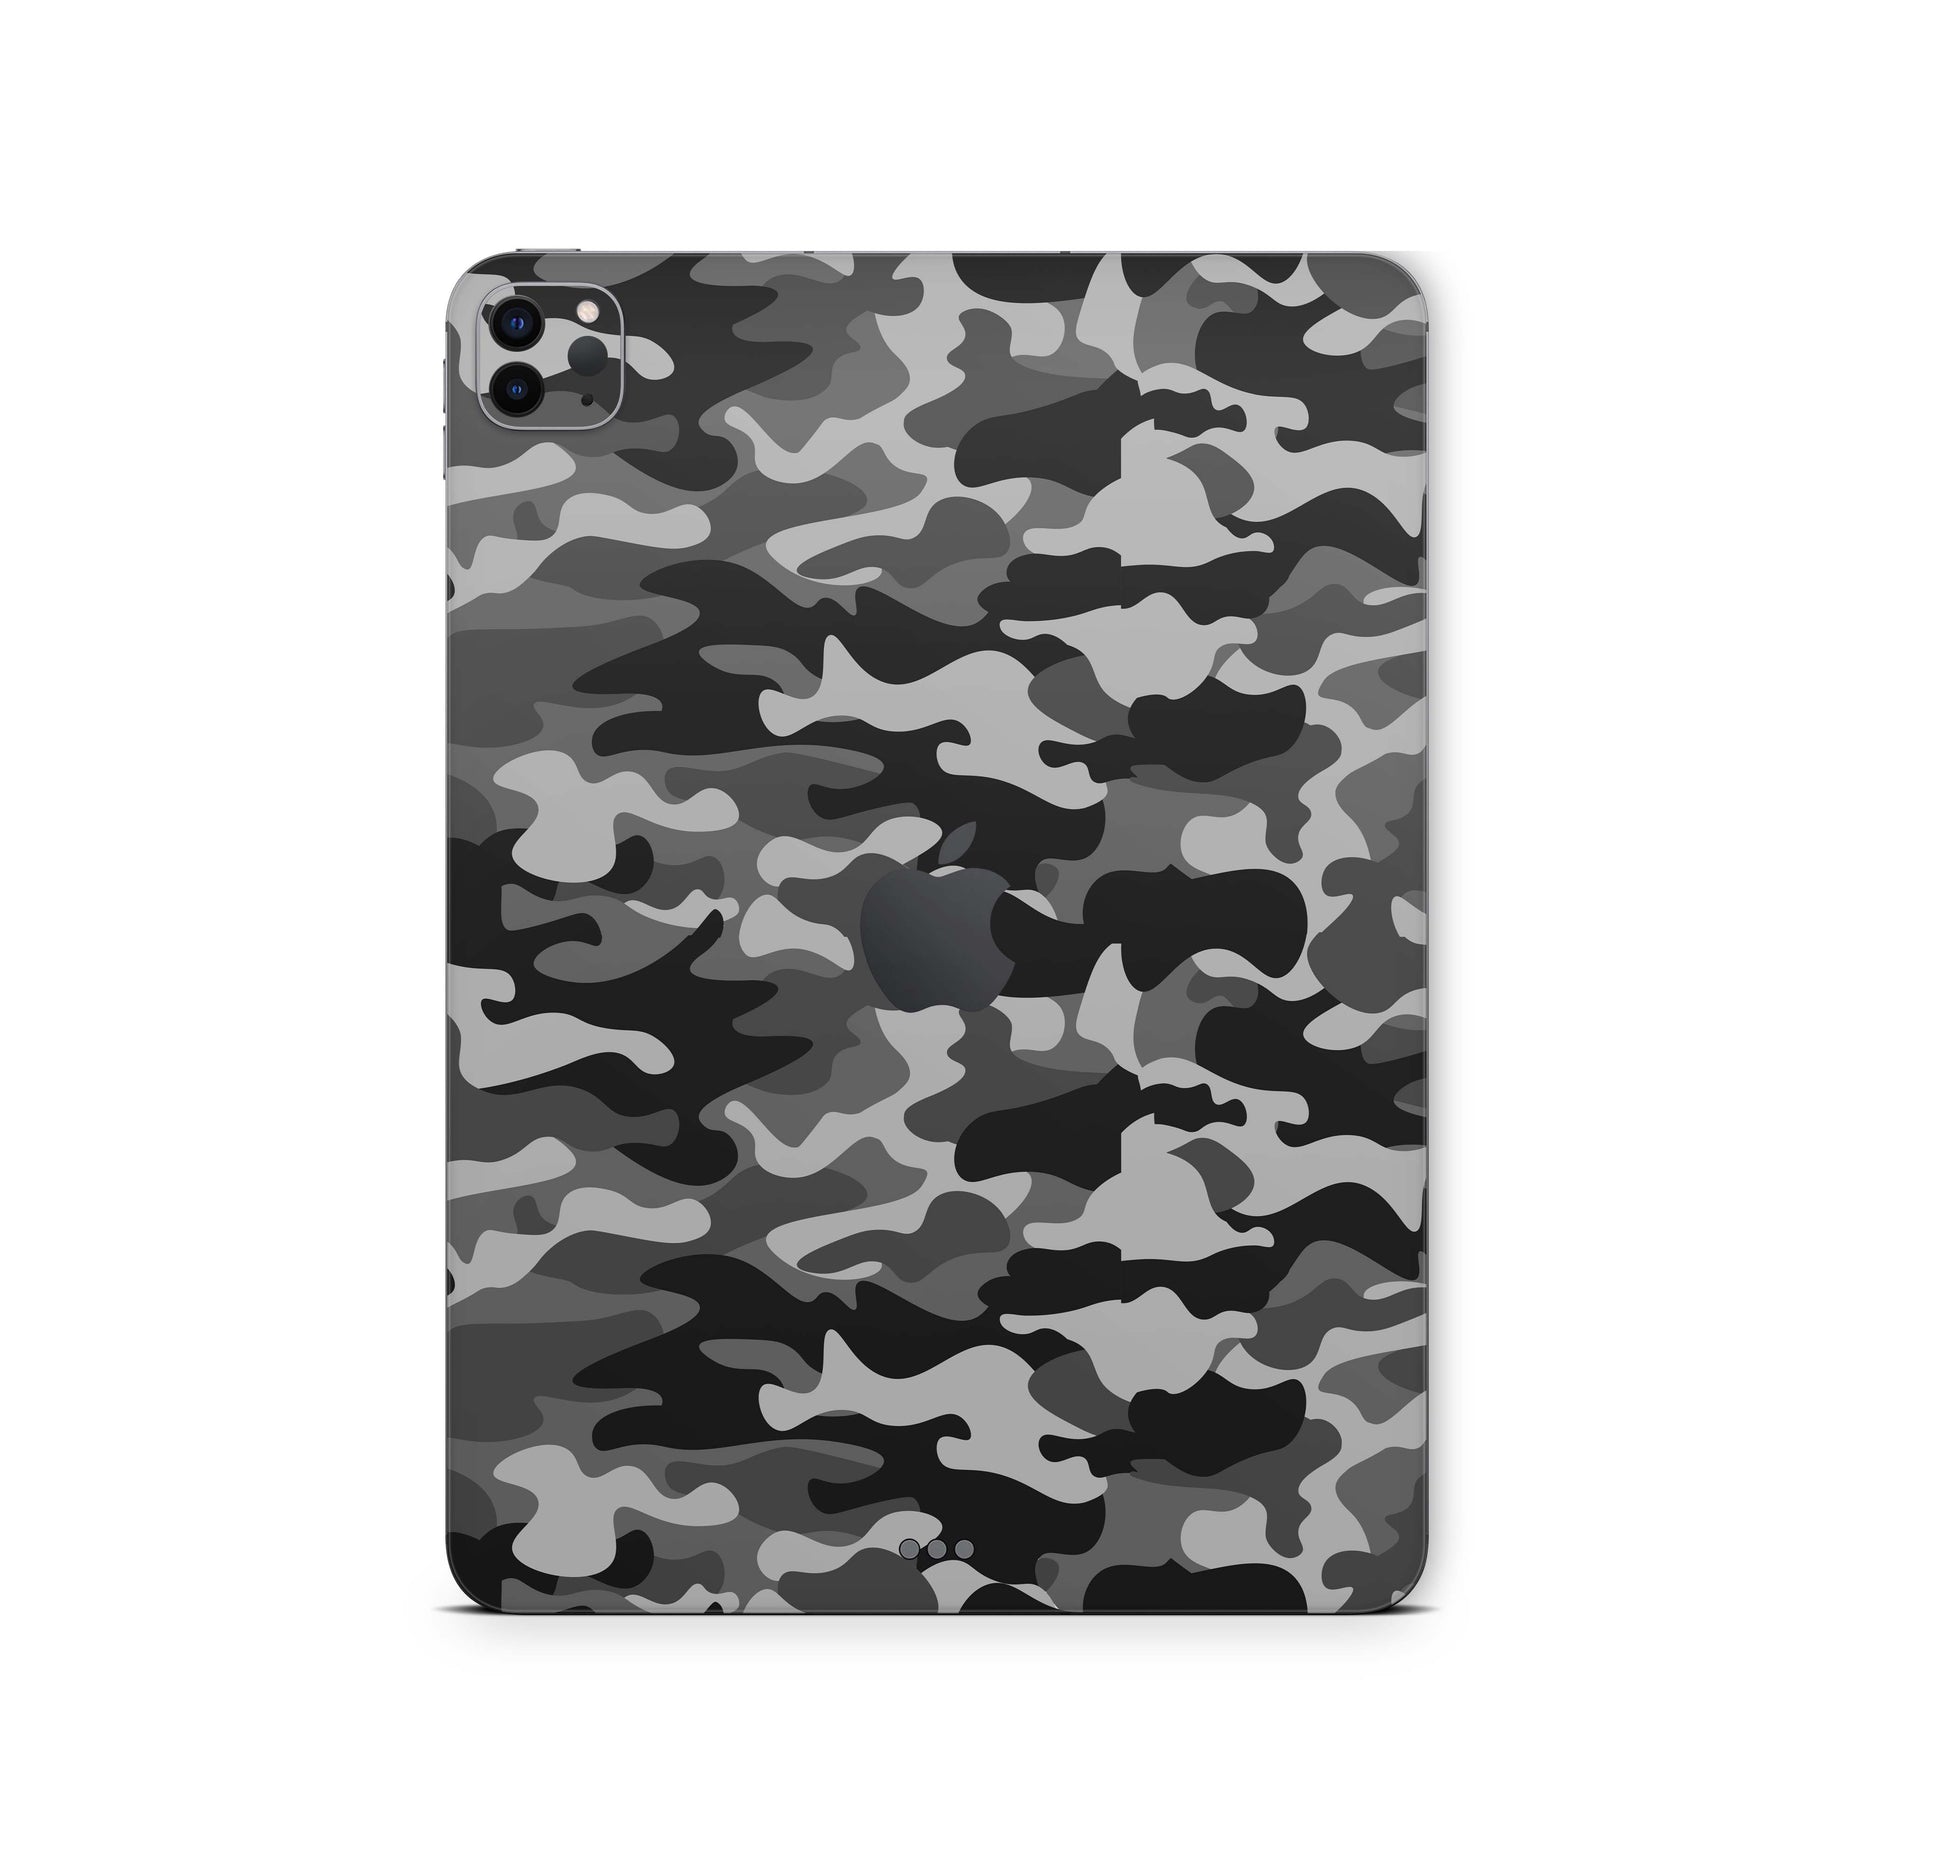 iPad Pro Skin 11" 3.Generation M1 2021 Design Cover Folie Vinyl Skins & Wraps Aufkleber Skins4u Urban-Camo  